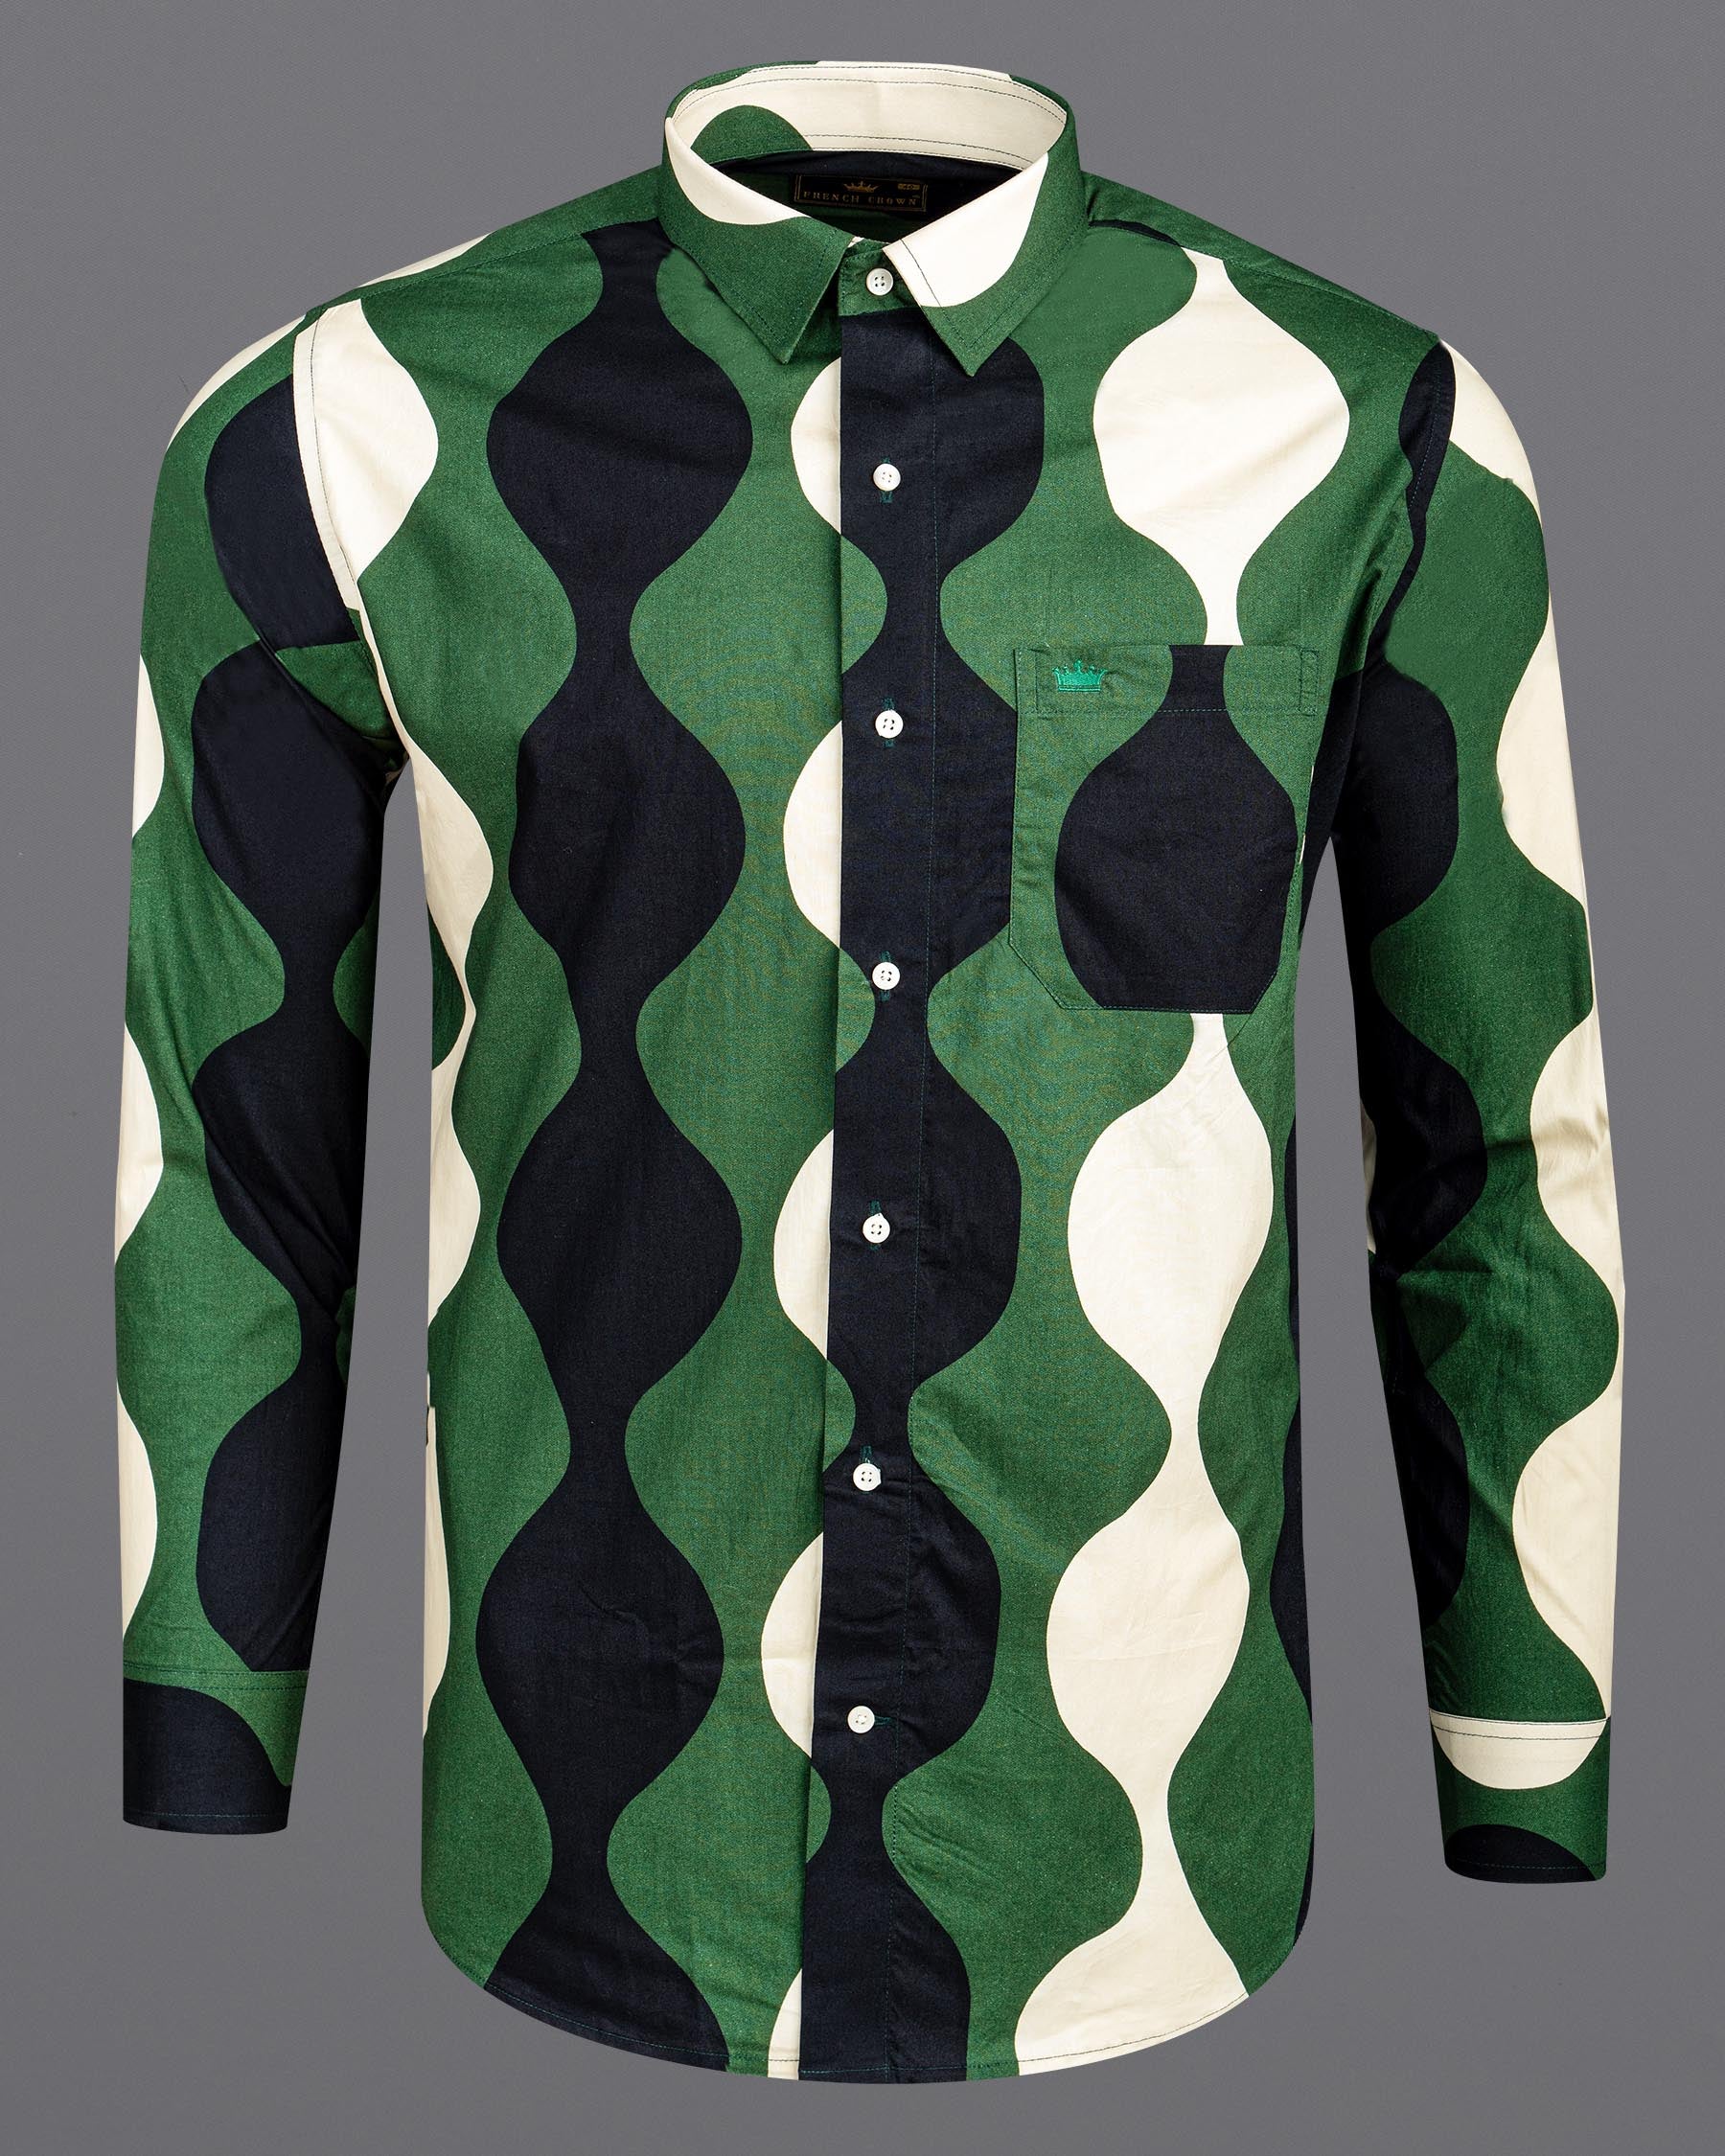 Killarney Green and Black Waves Print Premium Cotton Shirt 6697-38,6697-38,6697-39,6697-39,6697-40,6697-40,6697-42,6697-42,6697-44,6697-44,6697-46,6697-46,6697-48,6697-48,6697-50,6697-50,6697-52,6697-52